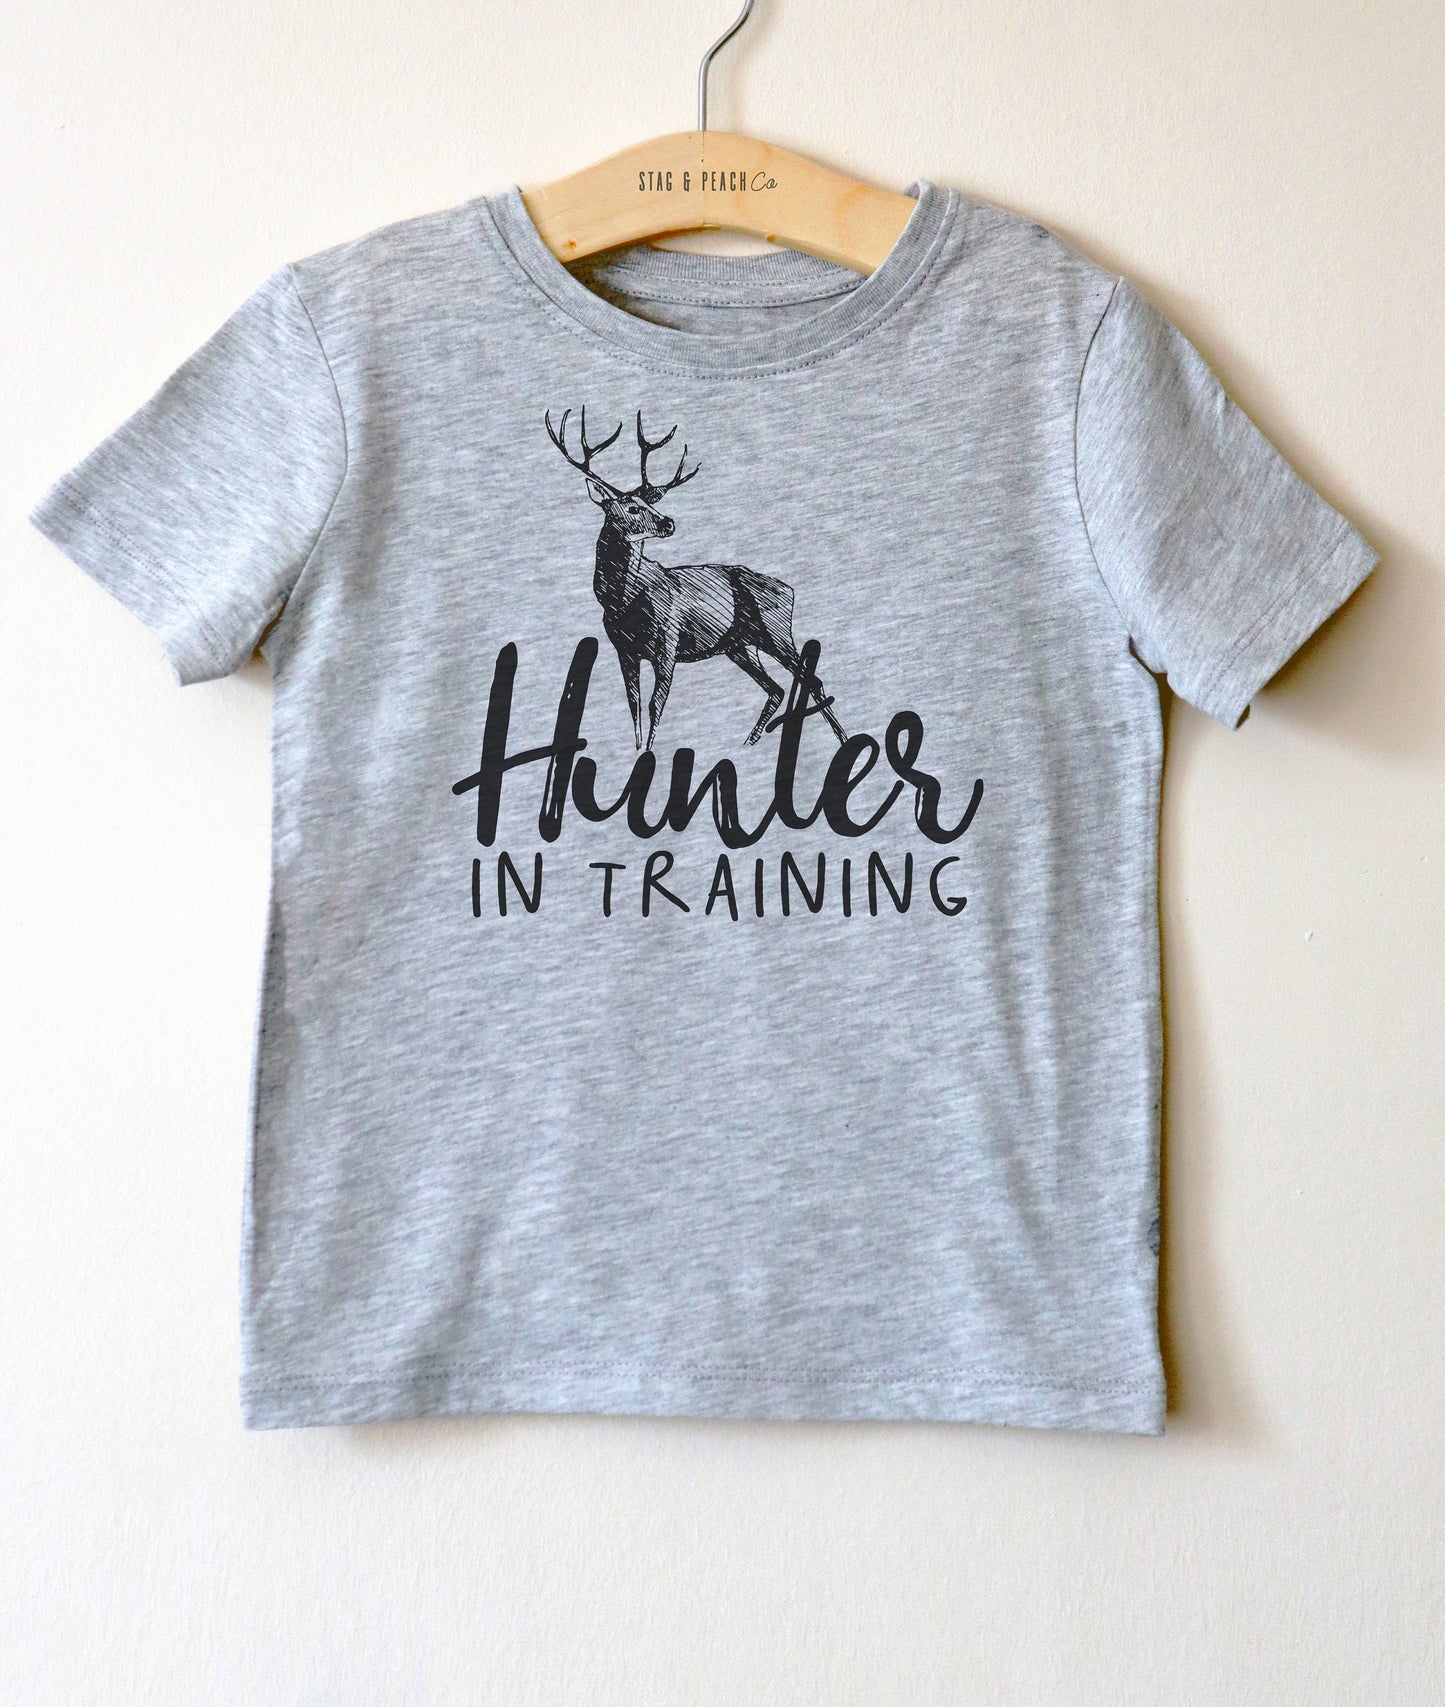 Hunter In Training Kids Shirt - Hunting Gifts, Deer Print Shirt, Deer Hunting Shirt, Hunting Kids Clothes, Hunting Toddler Gift, Deer Shirt